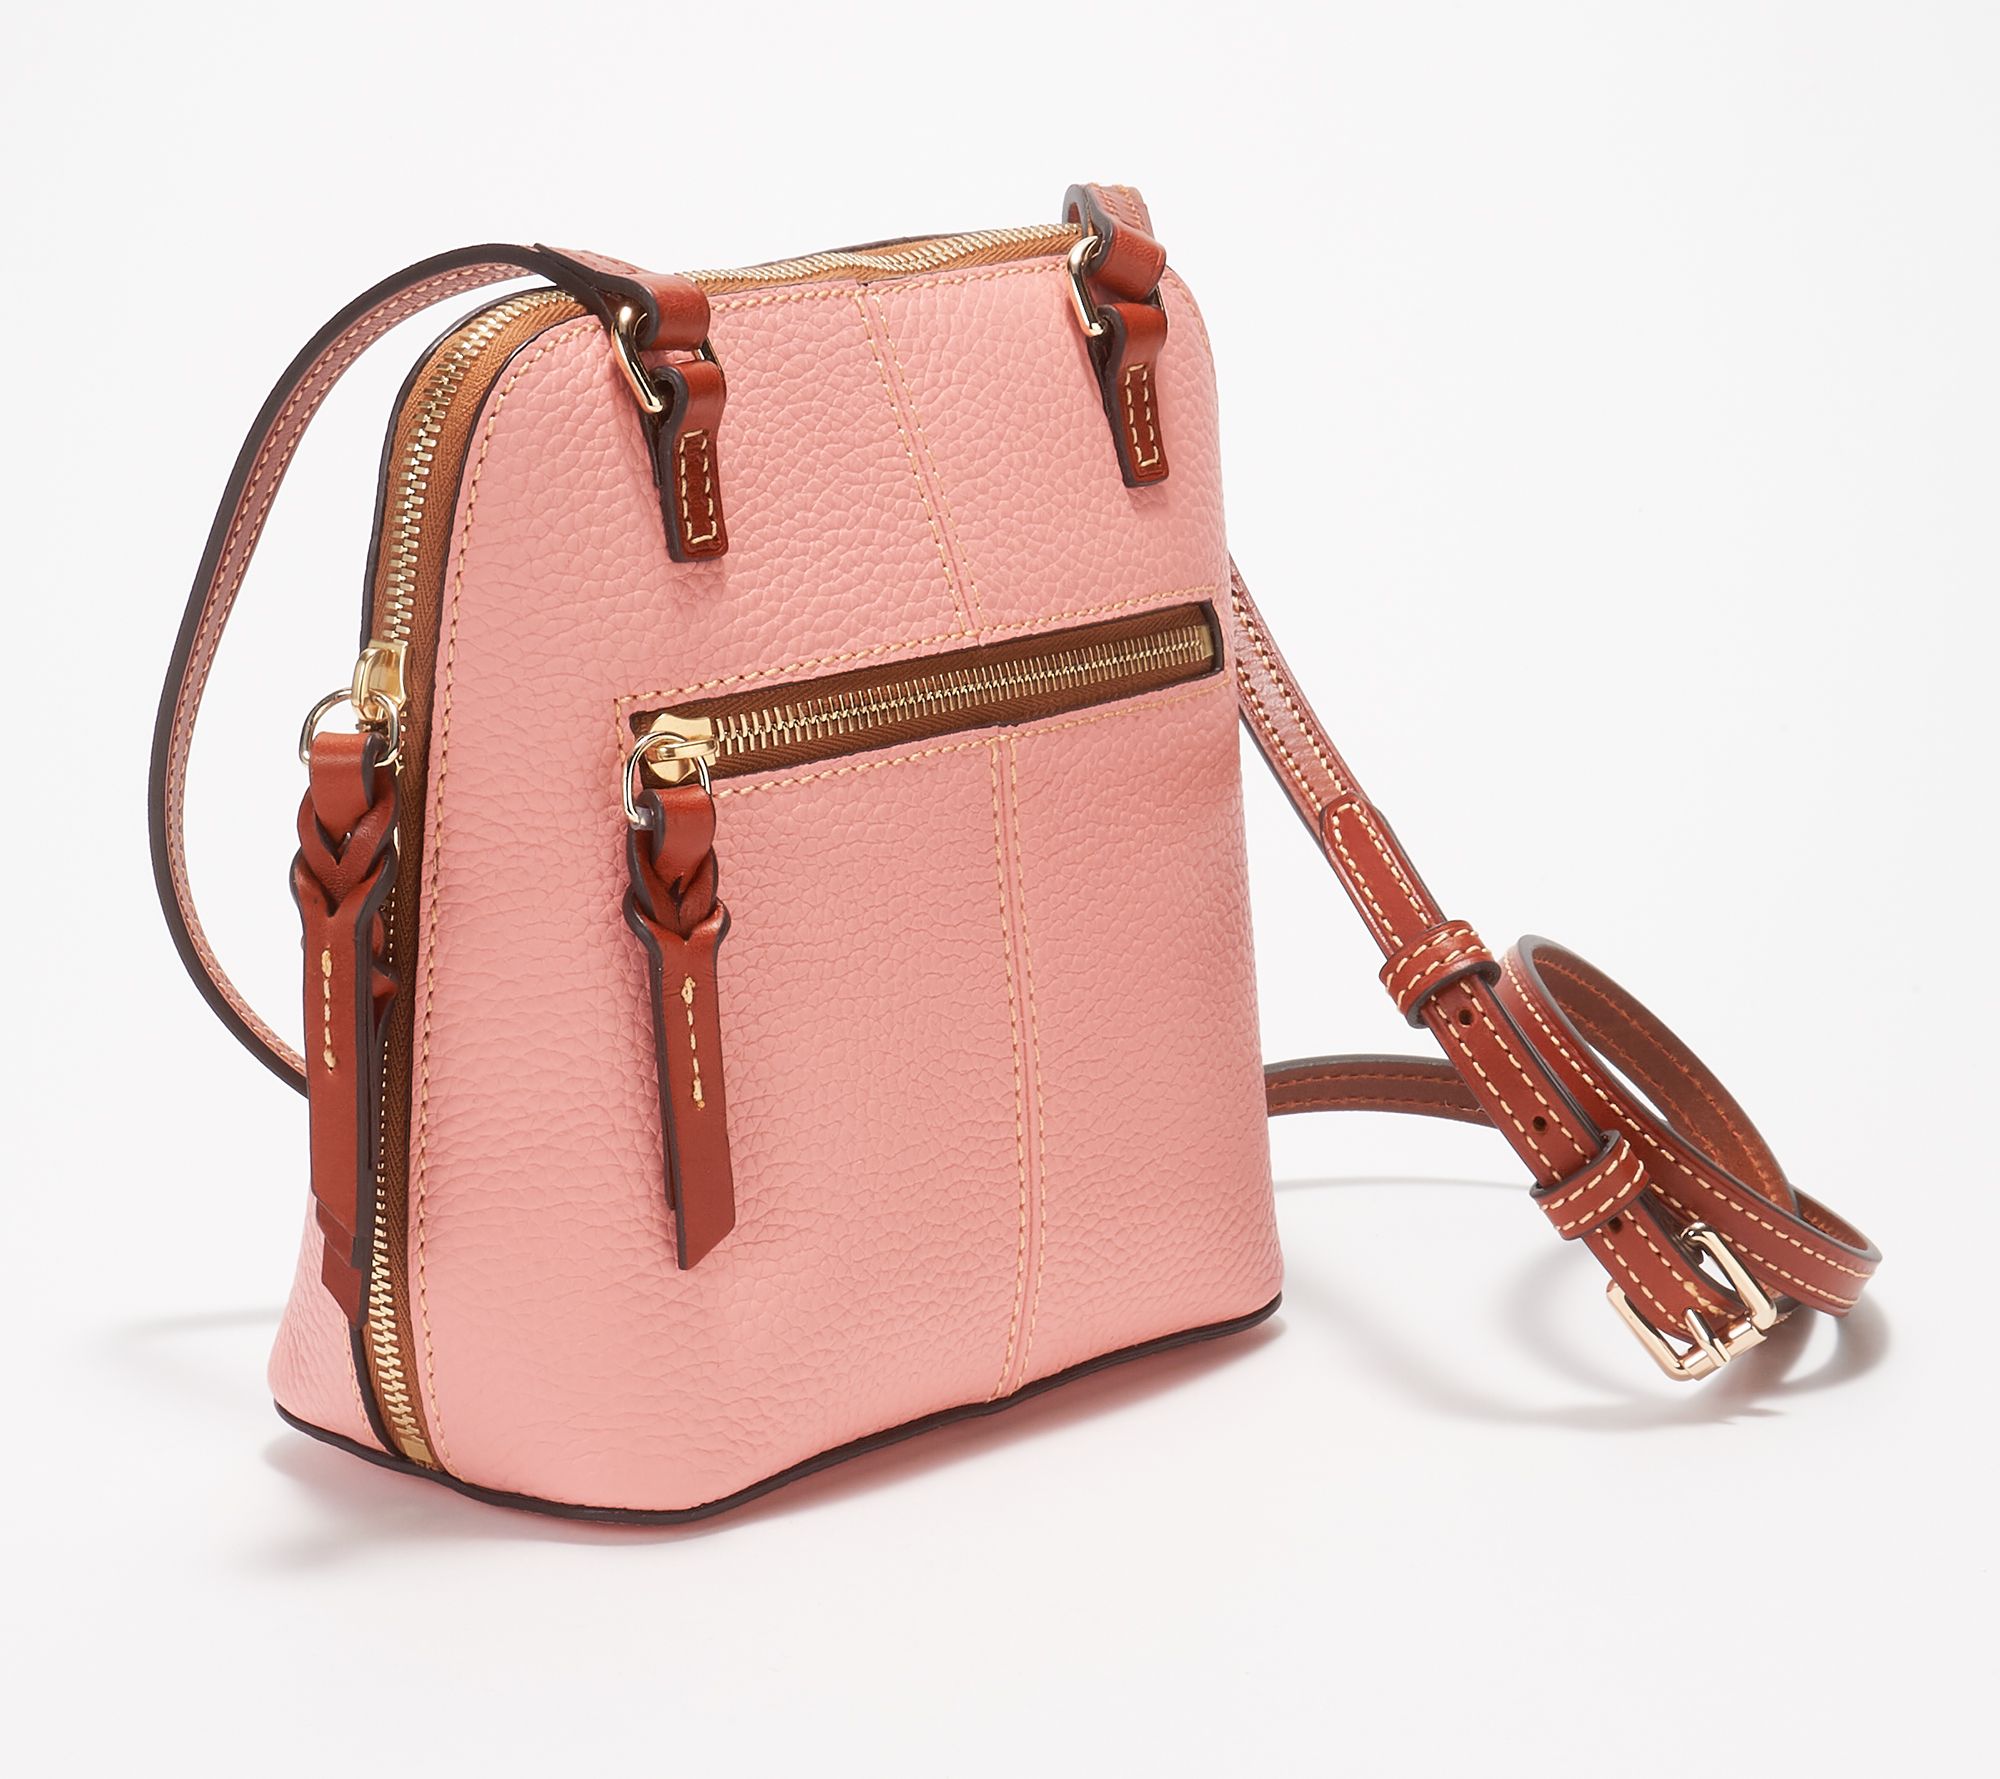 Dooney & Bourke Pebble Leather Crossbody Handbag -Trixie - QVC.com